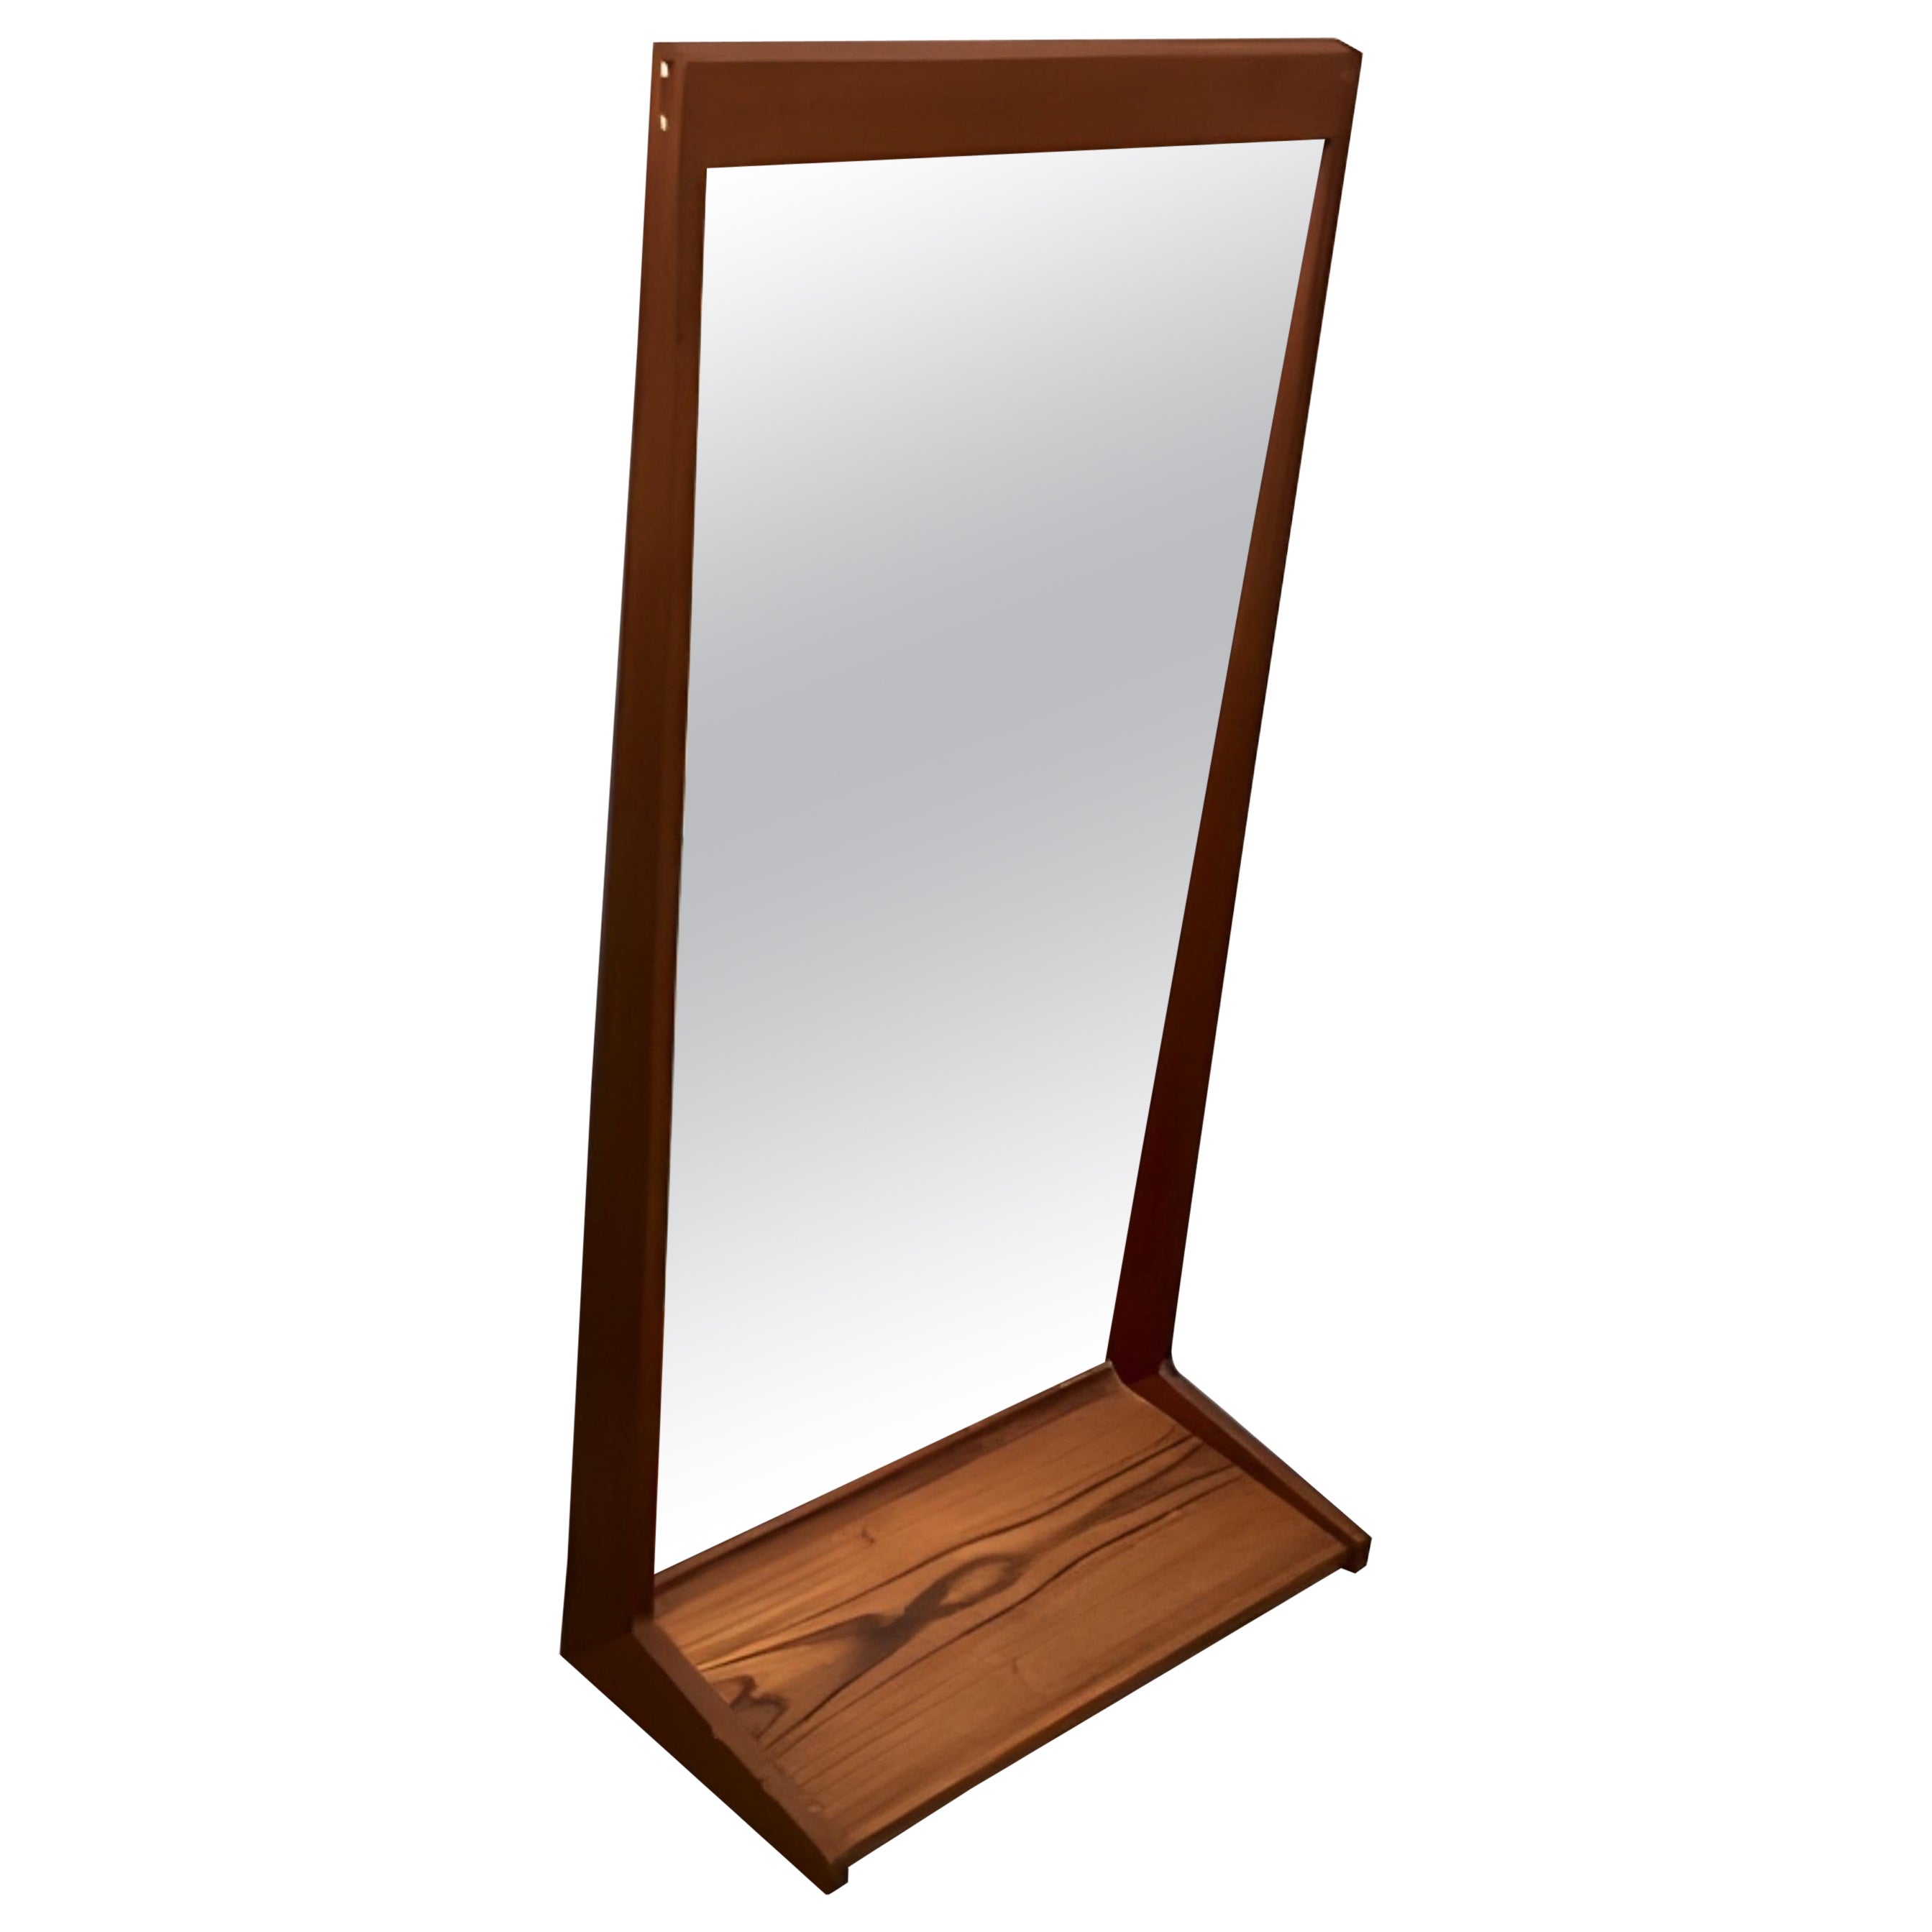 Midcentury Danish Modern Teak Mirror with Shelf For Sale